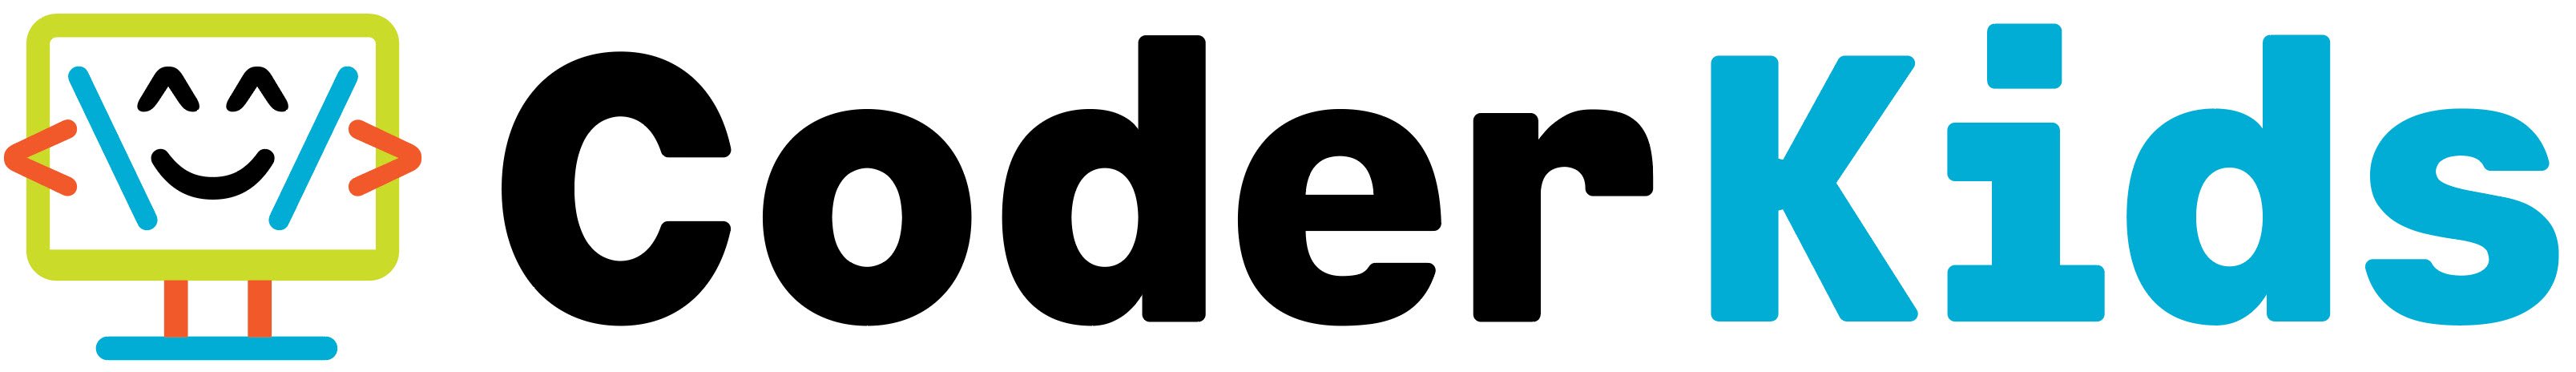 Coder Kids LLC logo